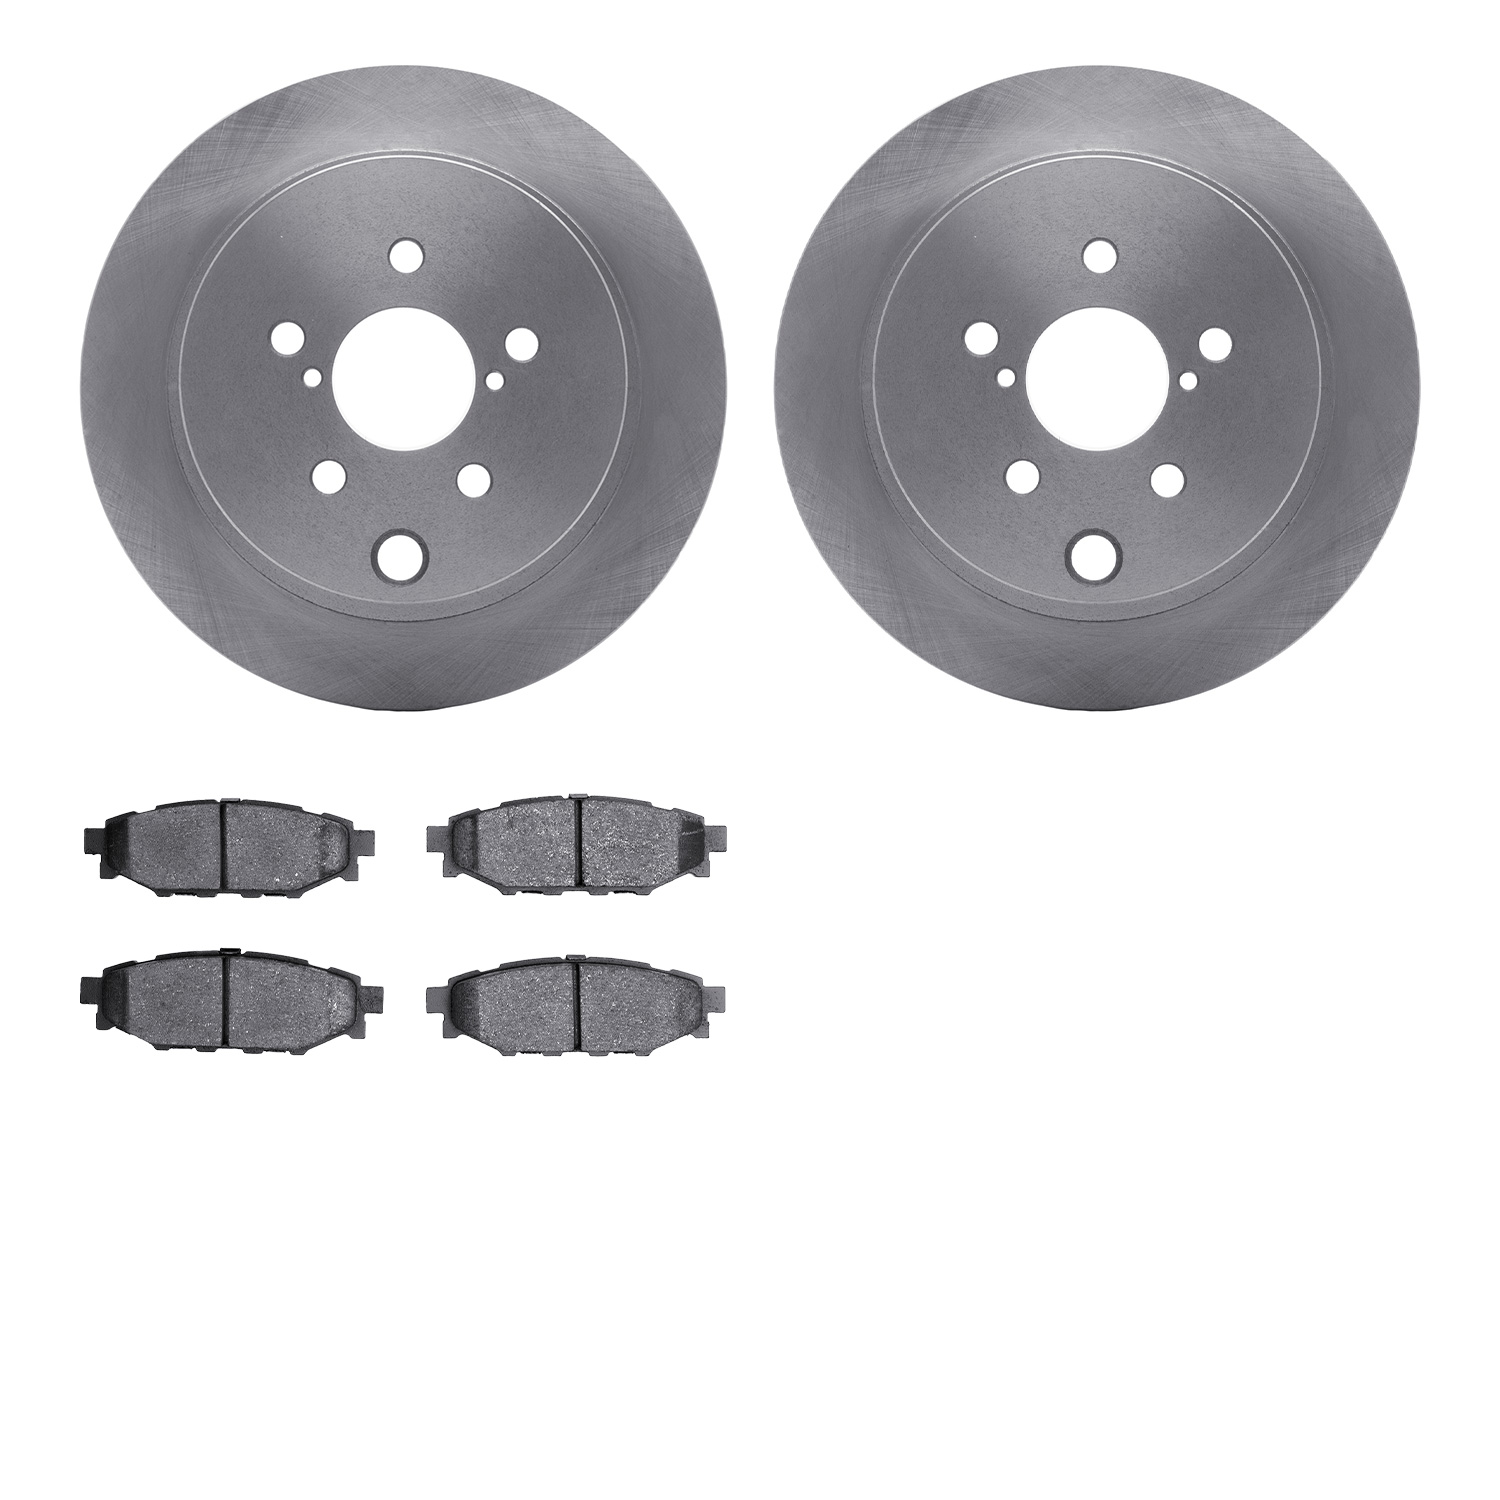 6302-13043 Brake Rotors with 3000-Series Ceramic Brake Pads Kit, Fits Select Subaru, Position: Rear